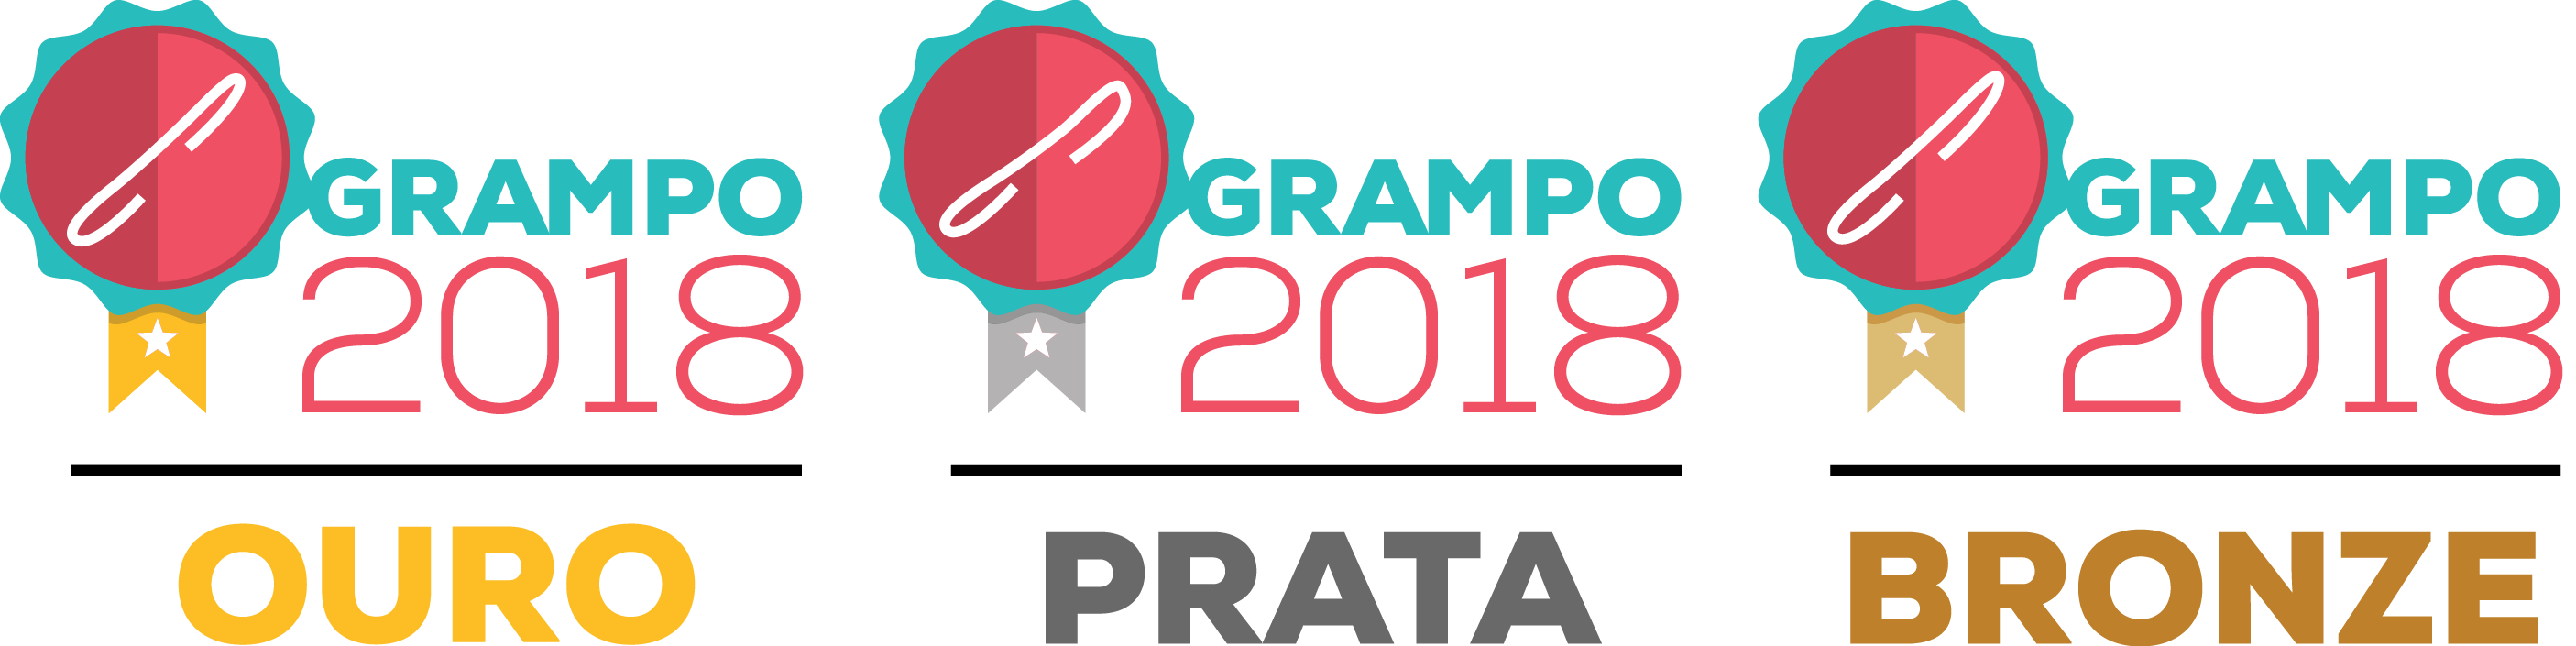 – Prêmio Grampo 2018 de Grandes HQs – Os 20 rankings dos eleitores convidados